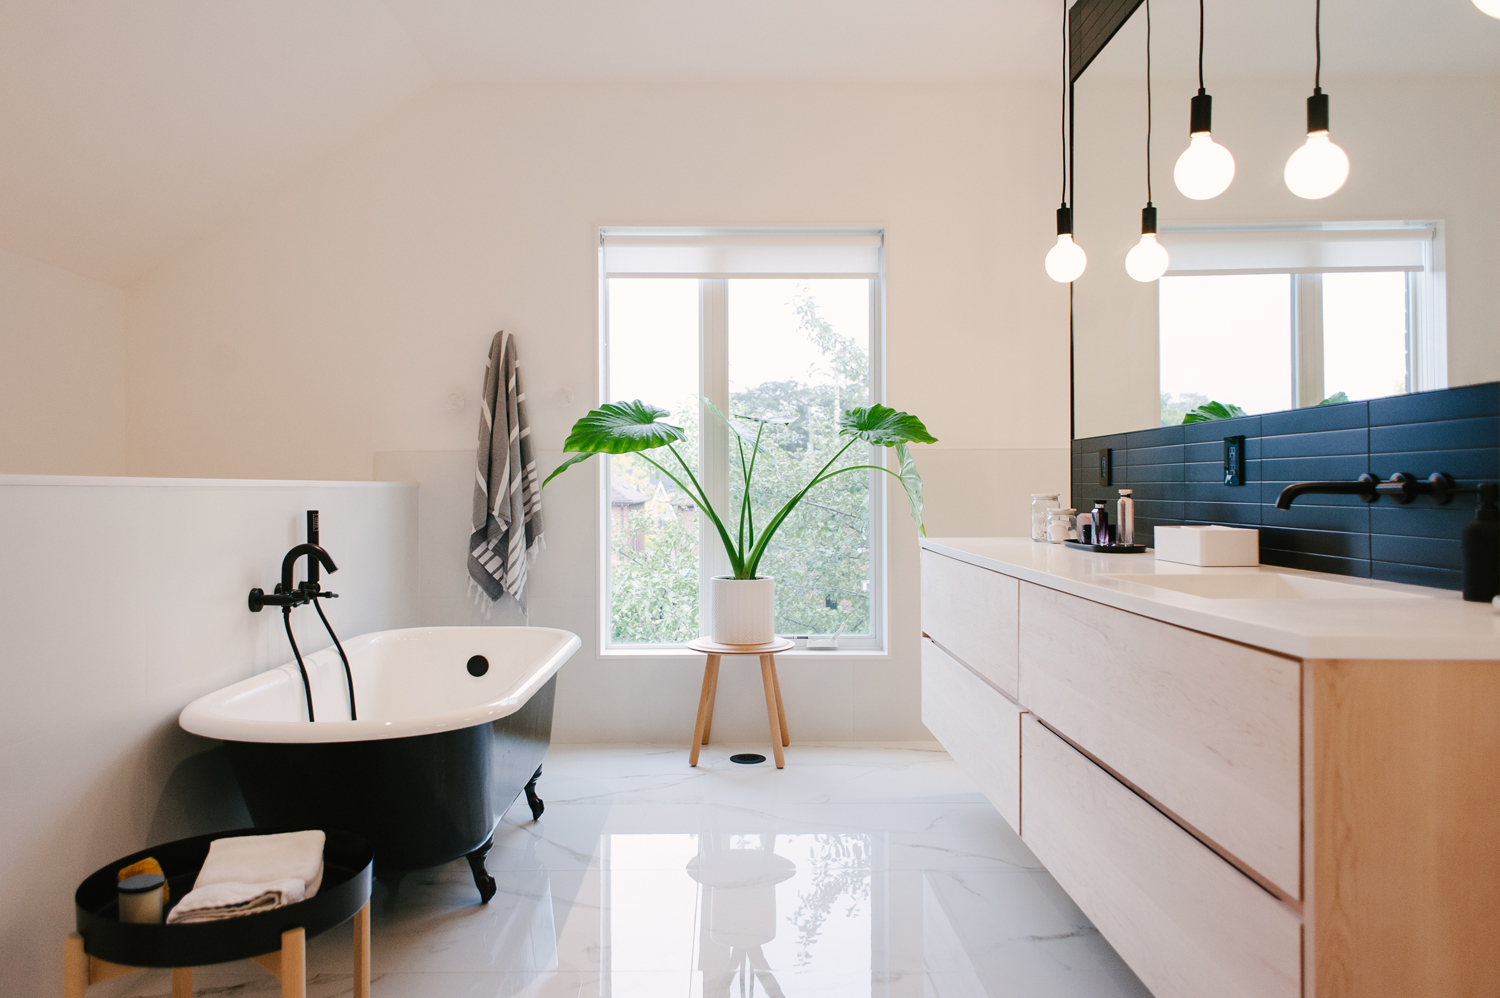 Sleek modern bathroom with black free-standing tub